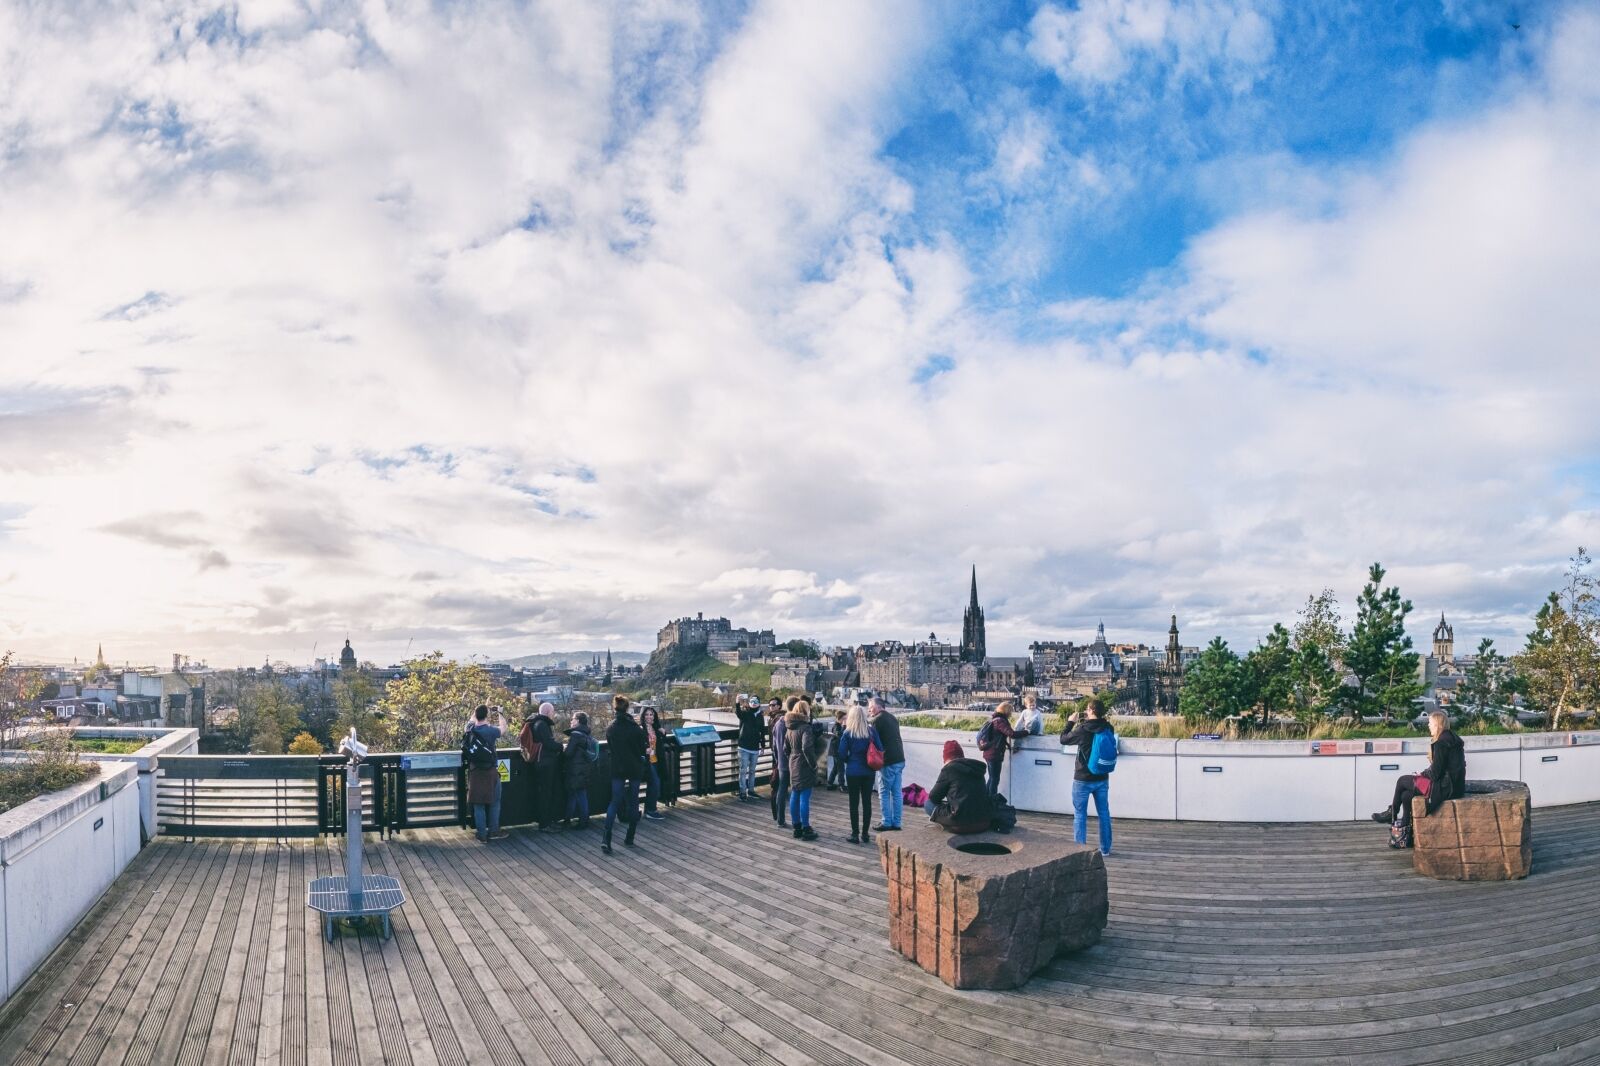 People enjoying themselves on the roof of the Scottish National Museum. Edinburgh, Scotland